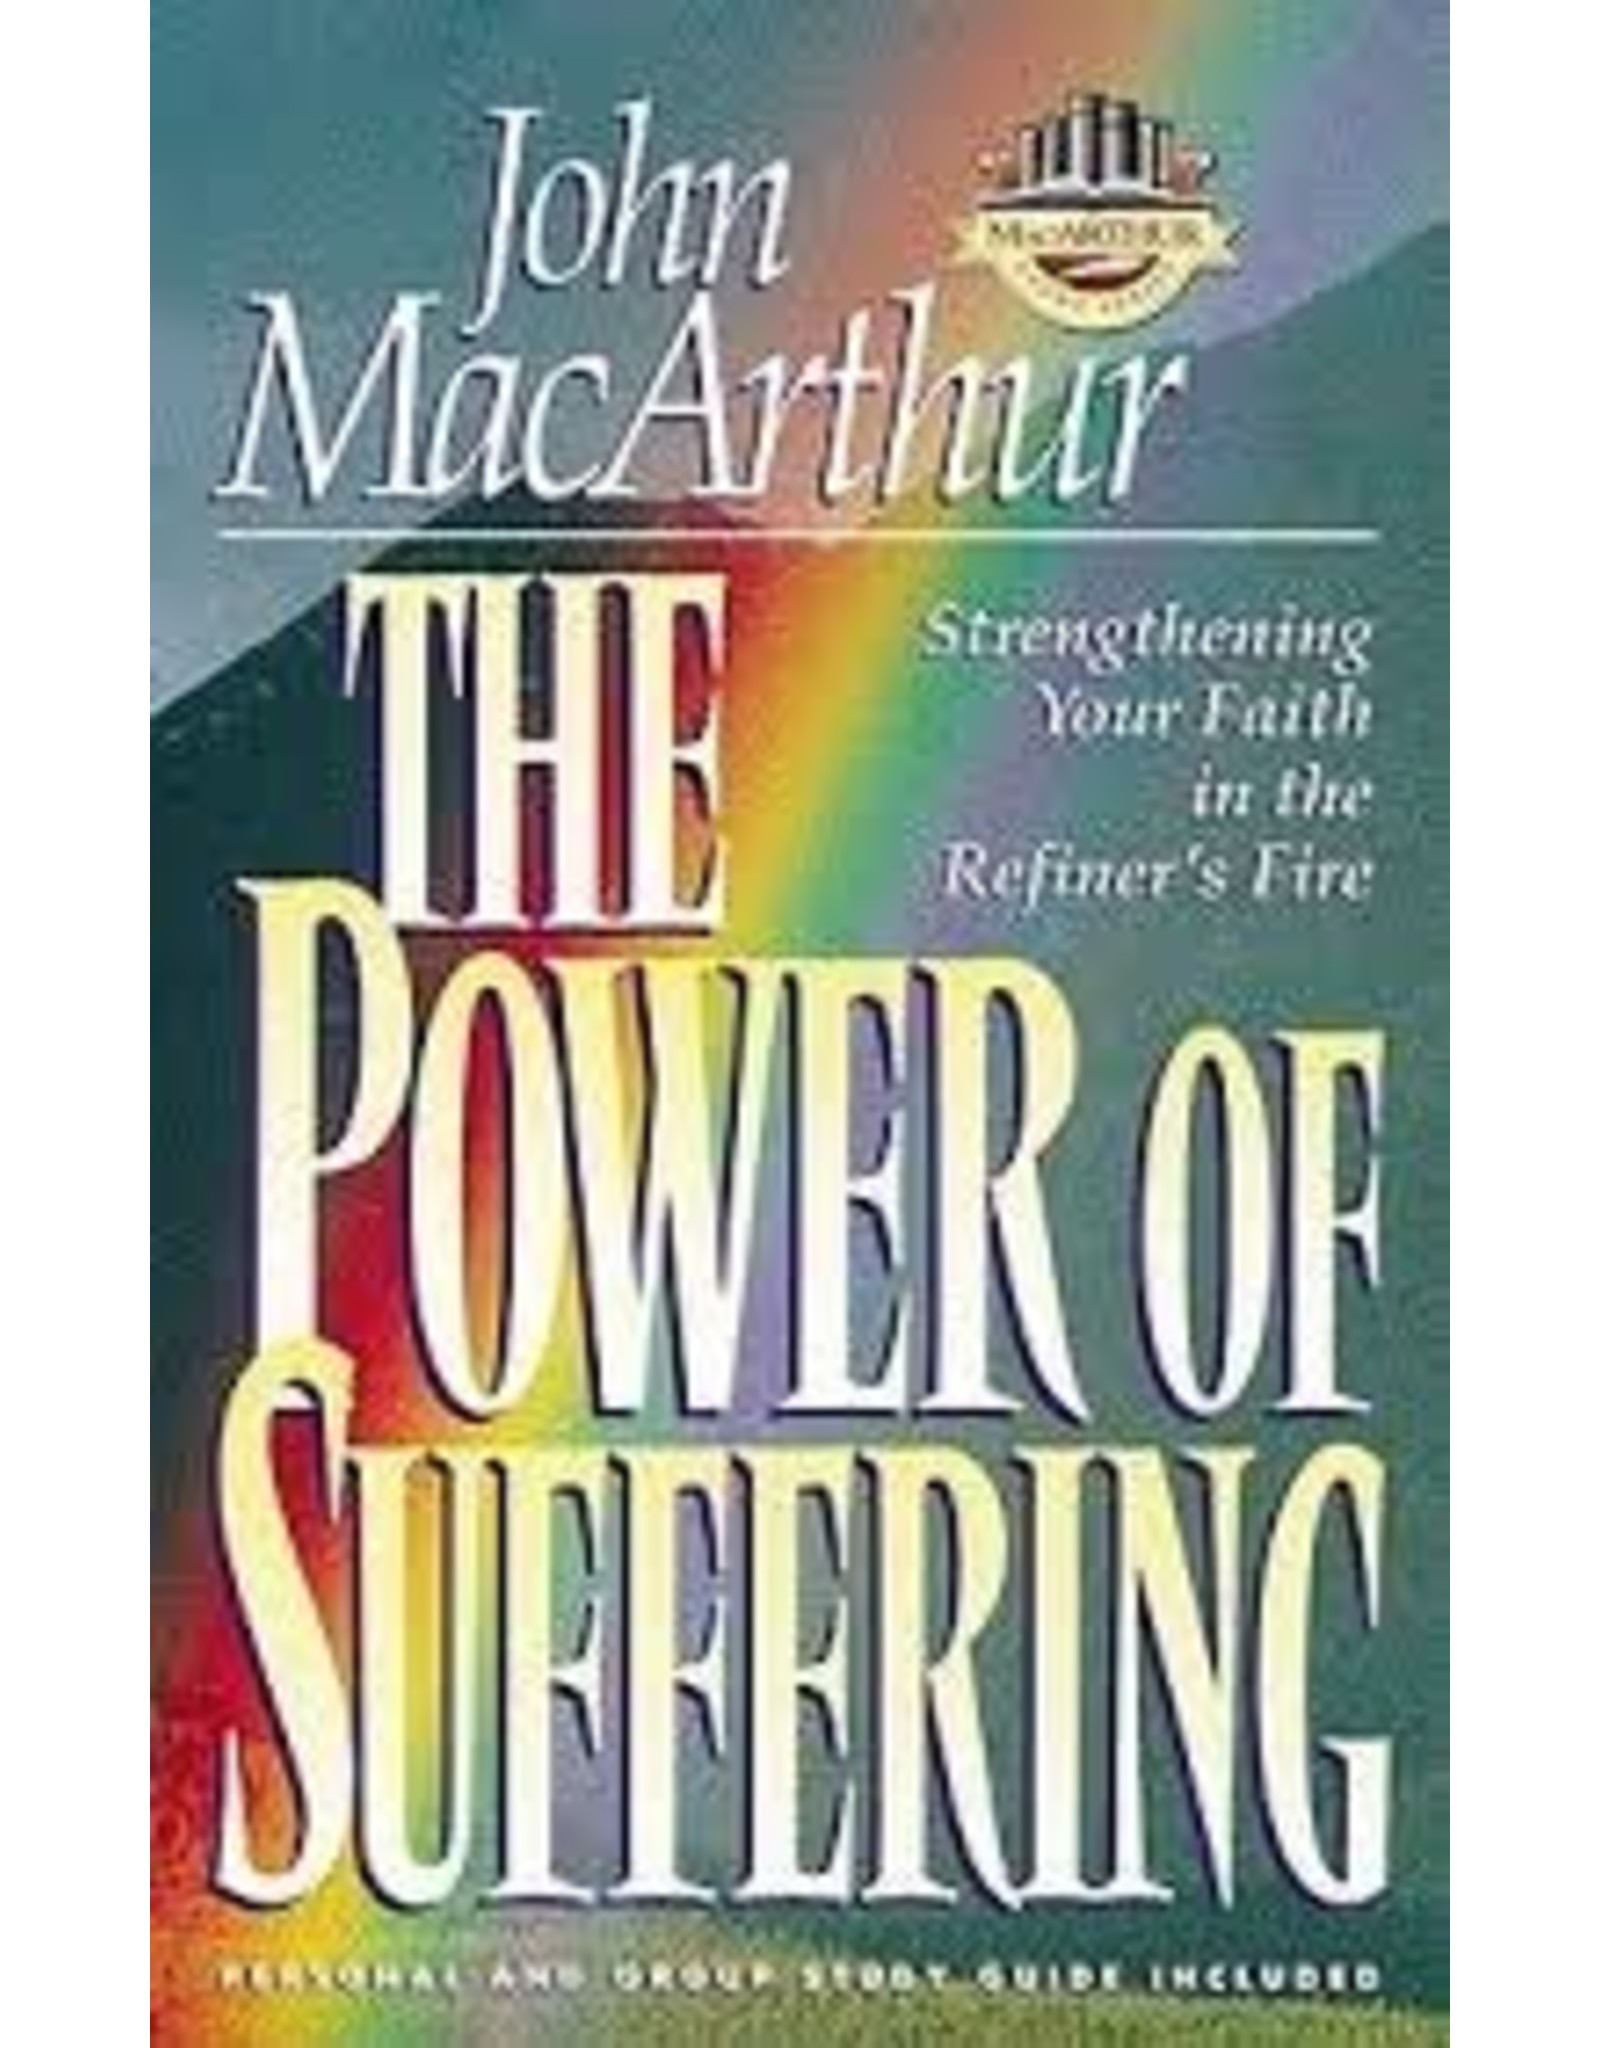 John MacArthur The Power of Suffering